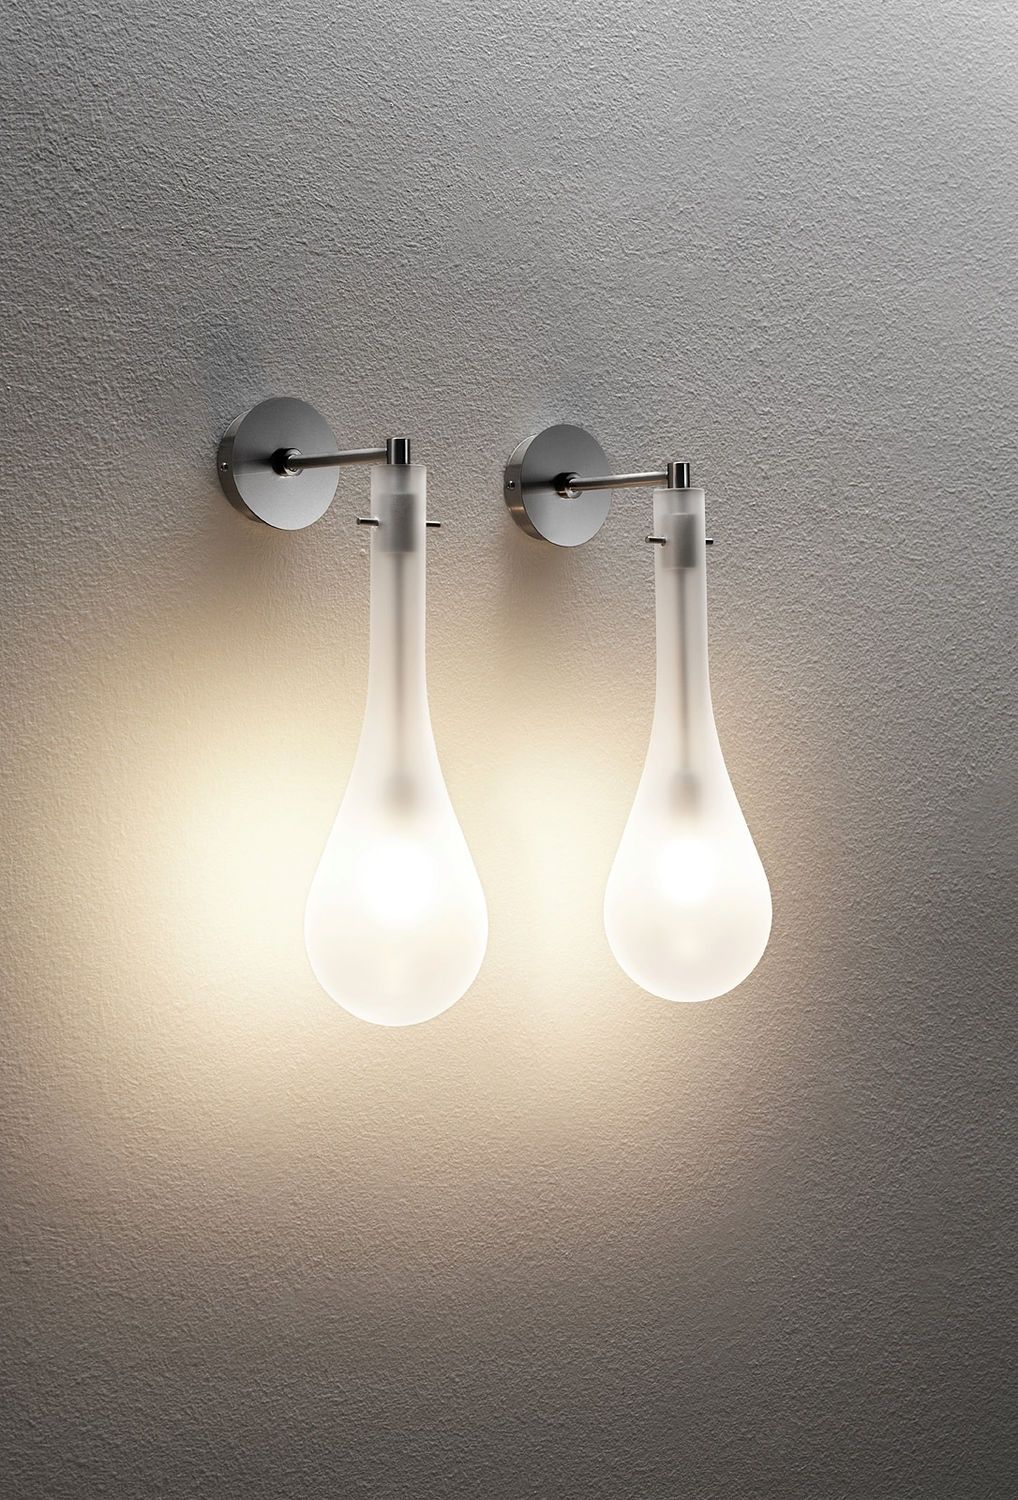 Designer Bathroom Wall Lights Home Design Ideas With Regard To Bathroom Chandelier Wall Lights (View 10 of 25)